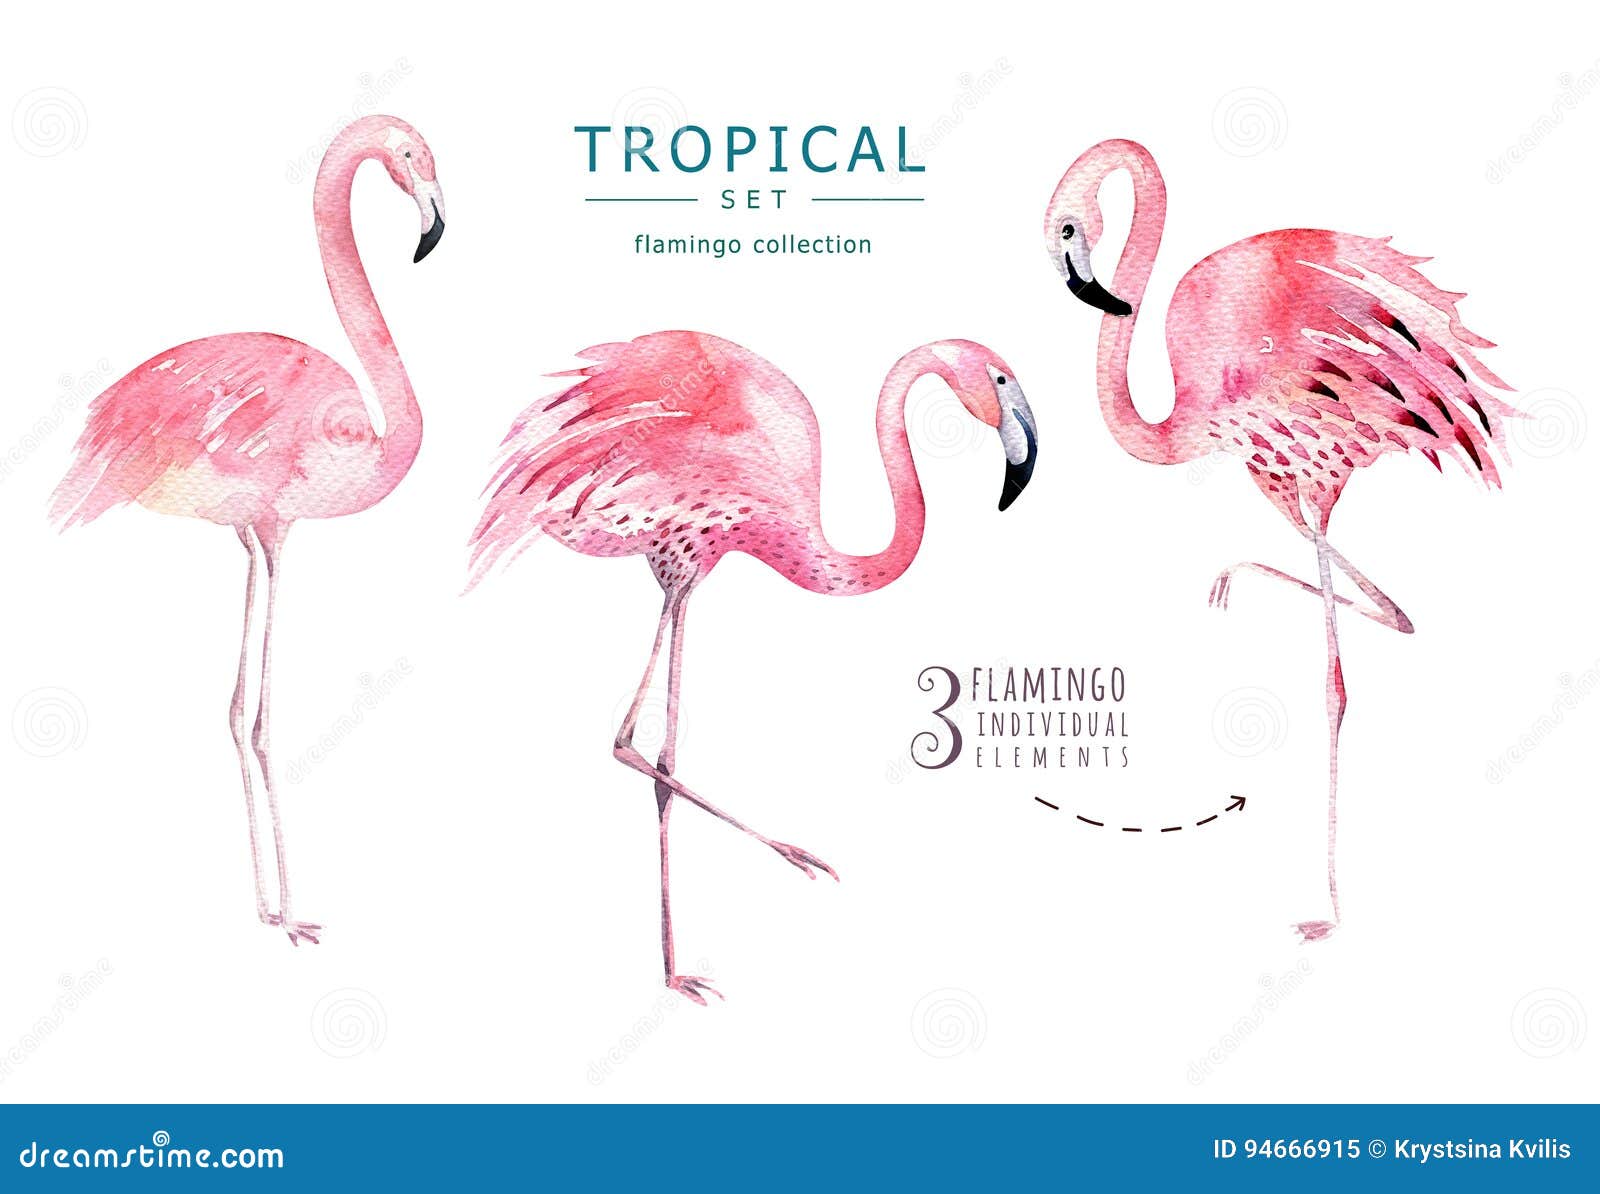 3 Pack - Flamingo Jungle